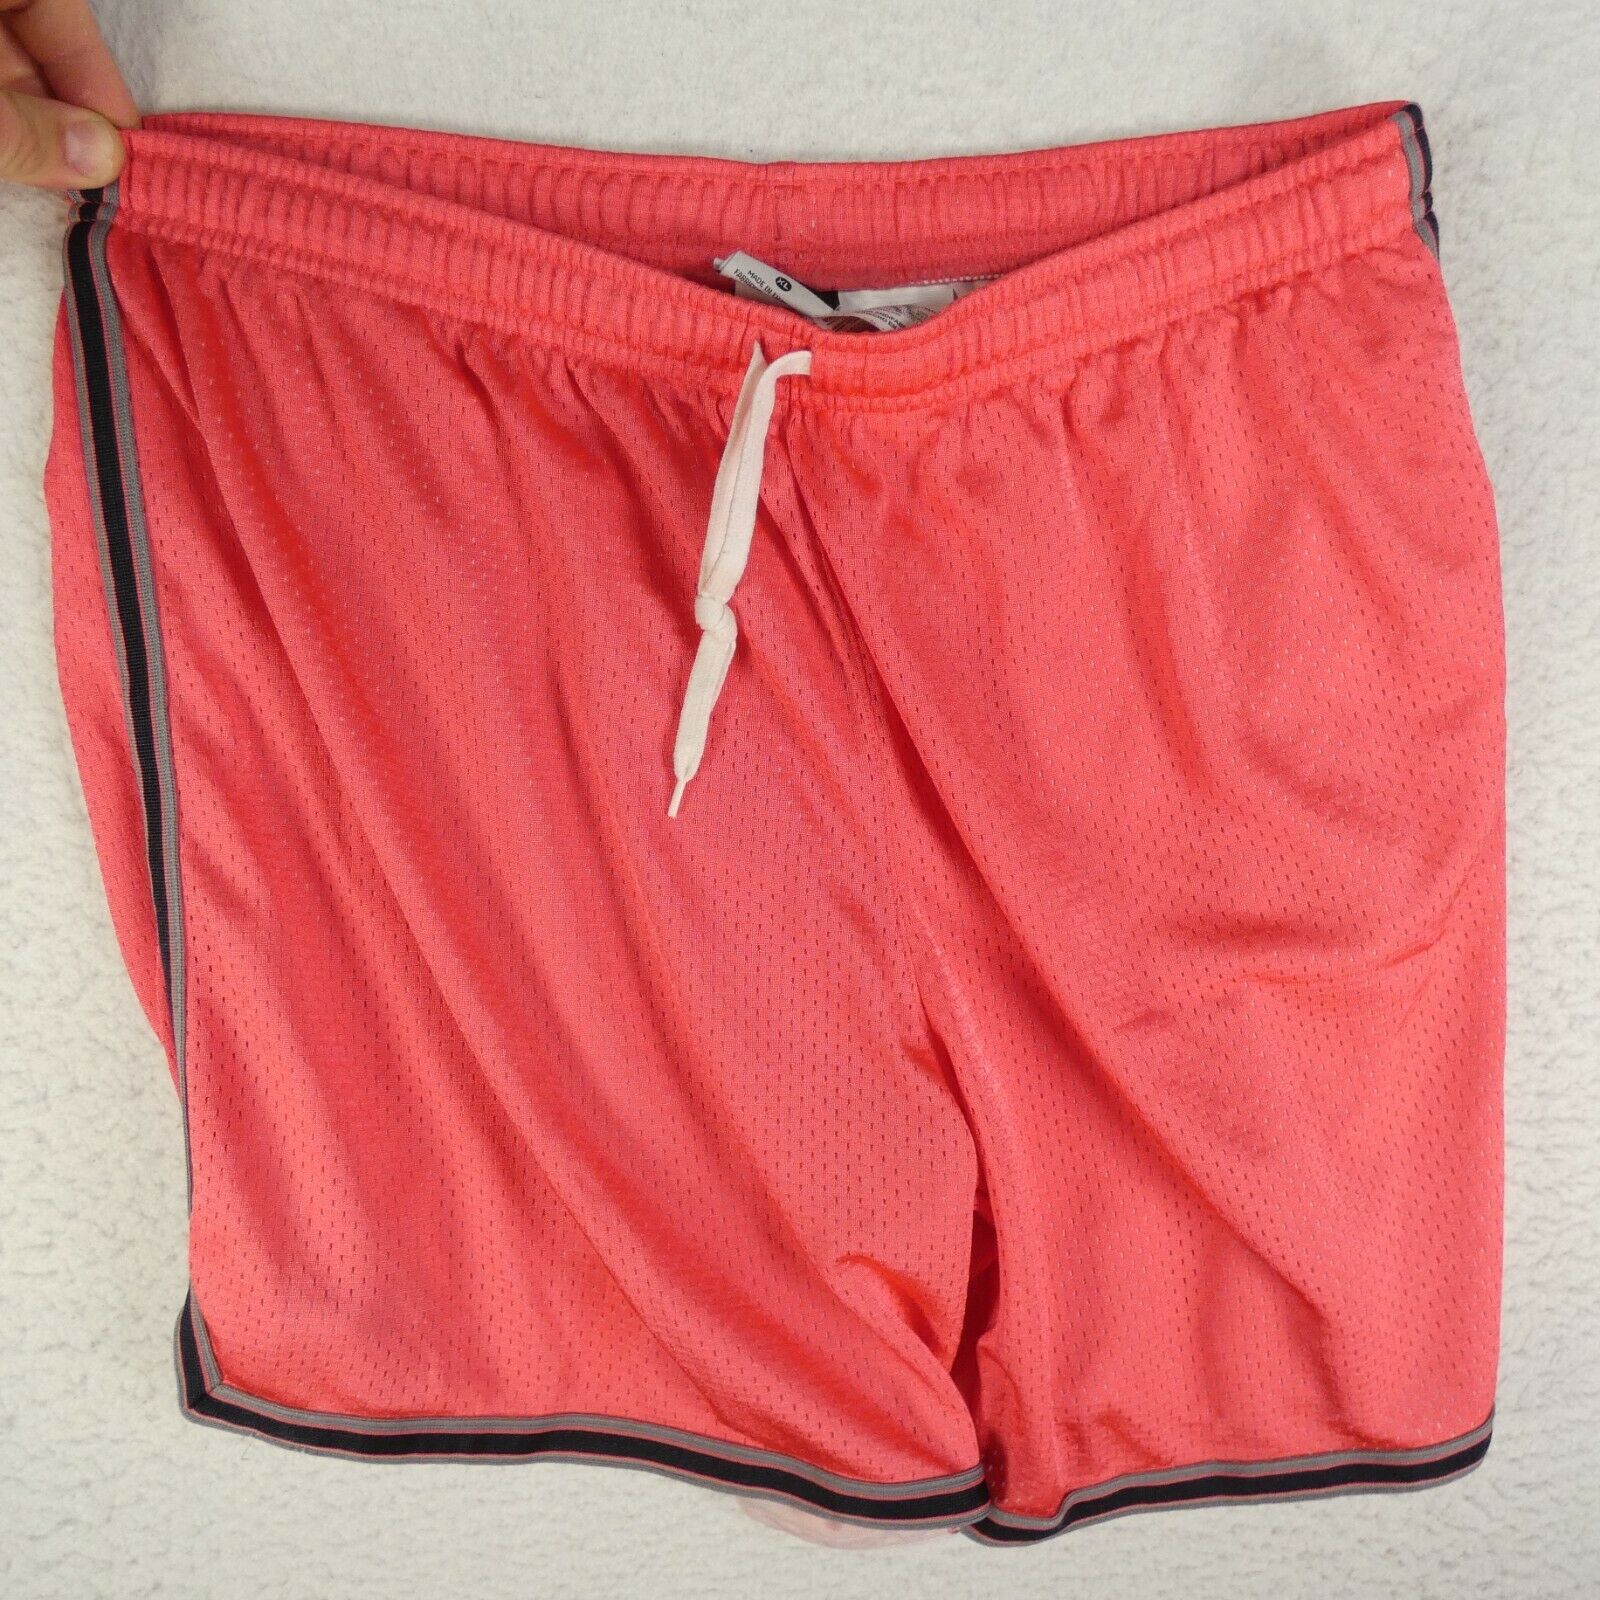 Nike Shorts Xl Extra Large (16-18) Womens Pink Mesh Elastic Waist & Drawstring